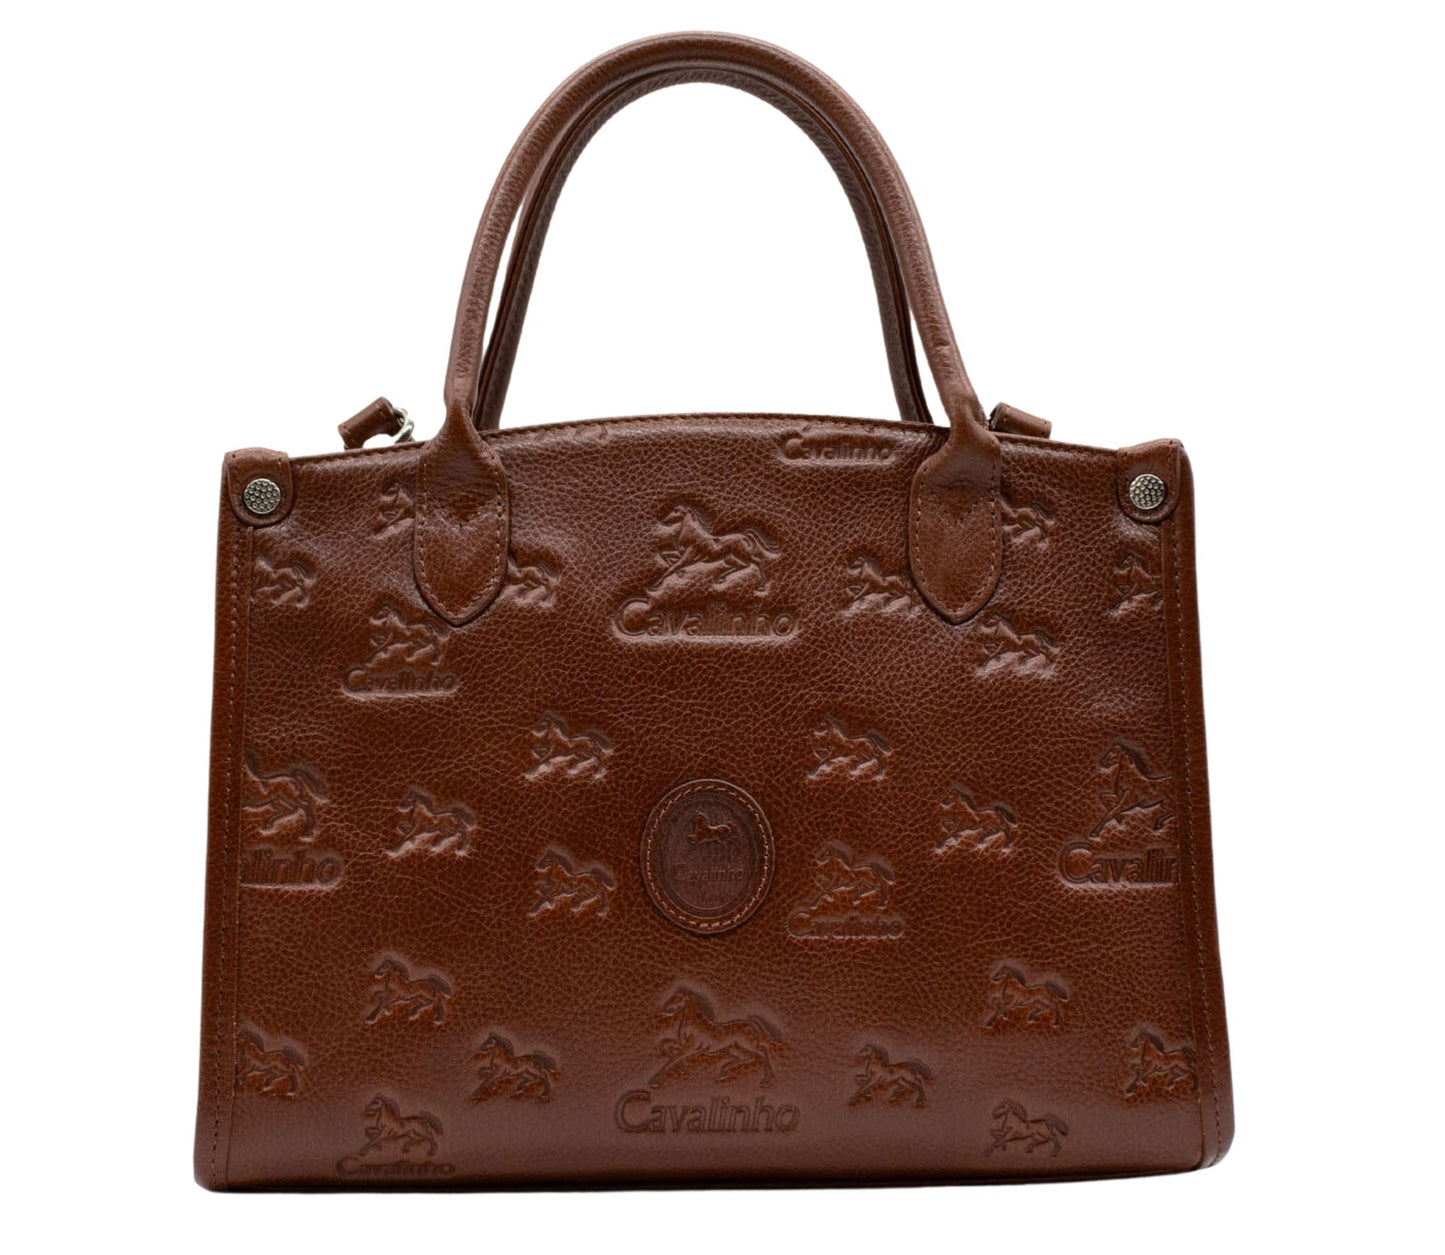 Cavalinho Cavalo Lusitano Leather Handbag - SaddleBrown - 18090480.13.99